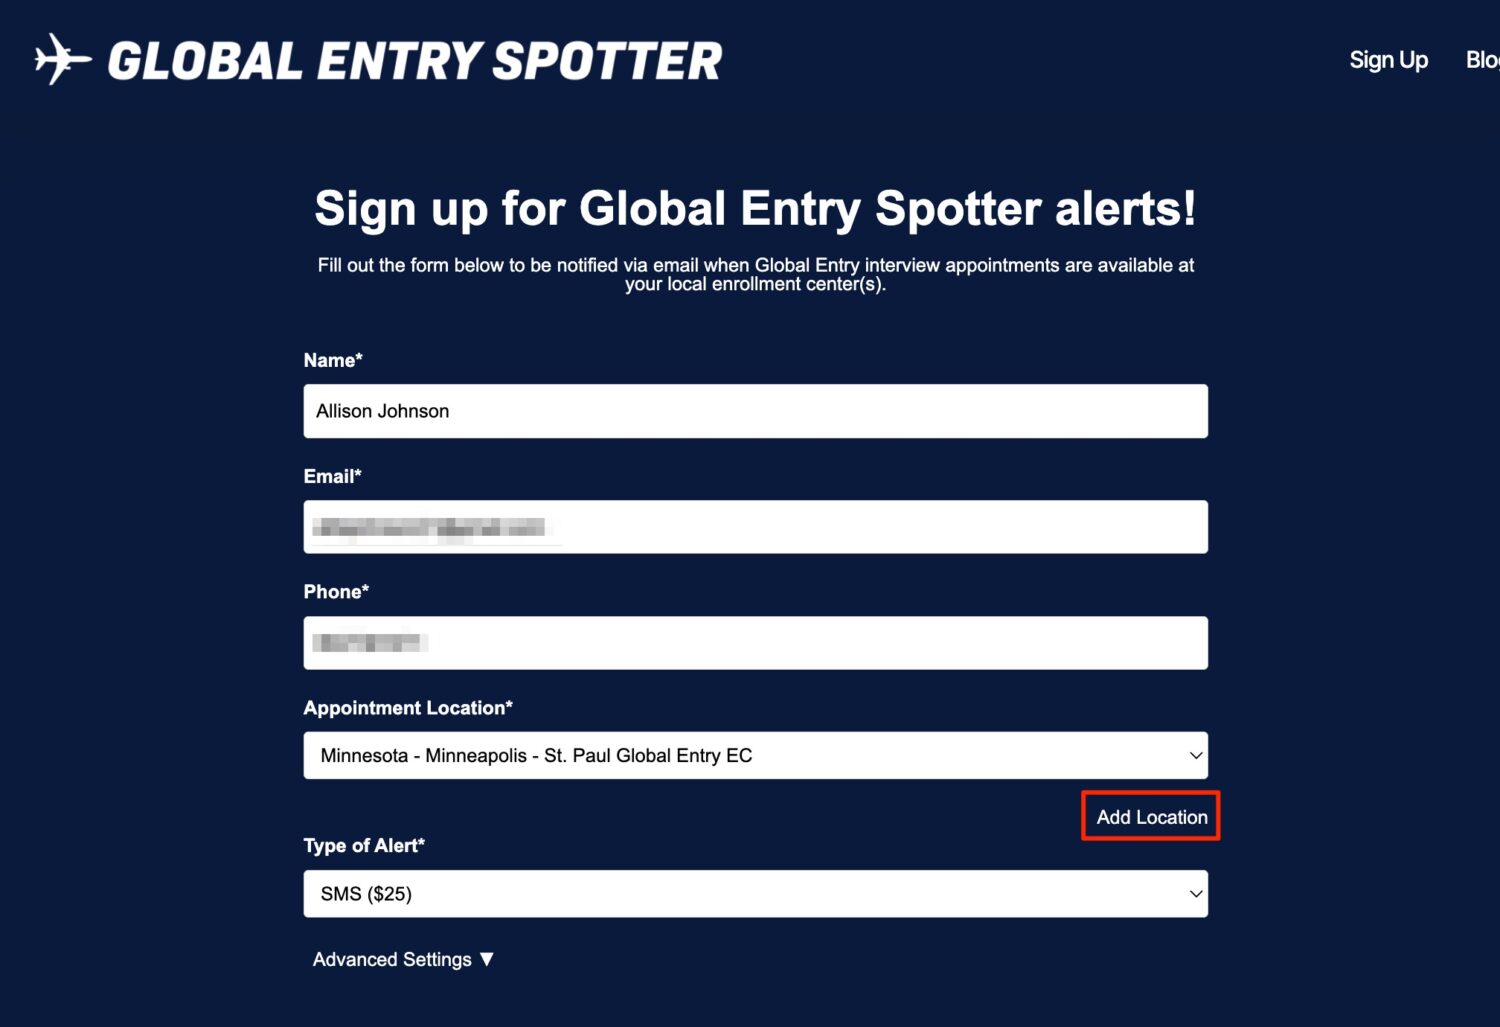 Global Entry Spotter sign up